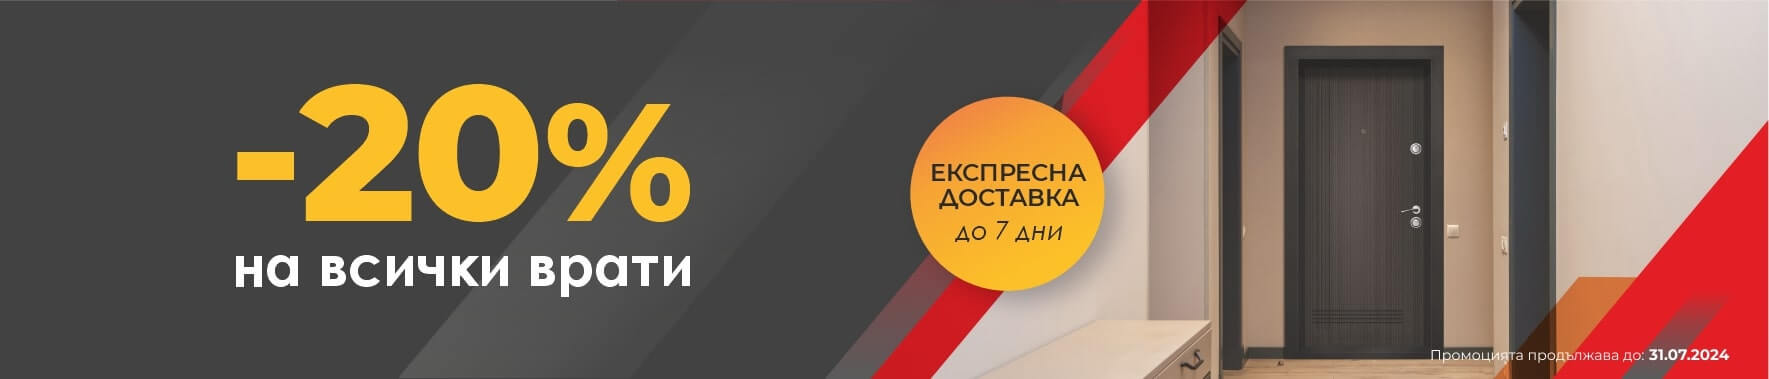 Врати Експрес - Промо Банер в Продукт до 31.07.2024